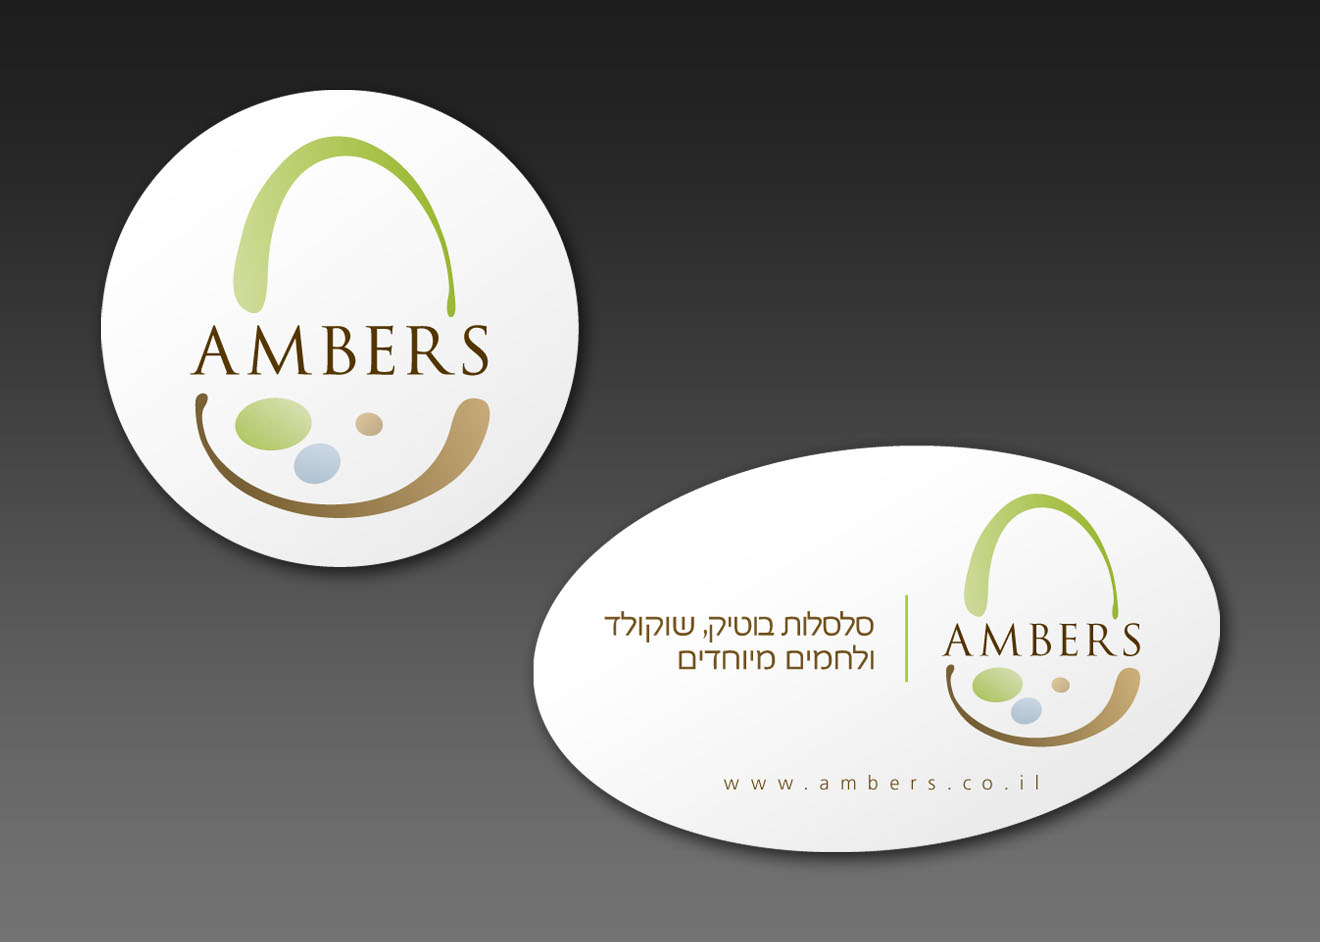 Ambers_brand__0001_Stickers